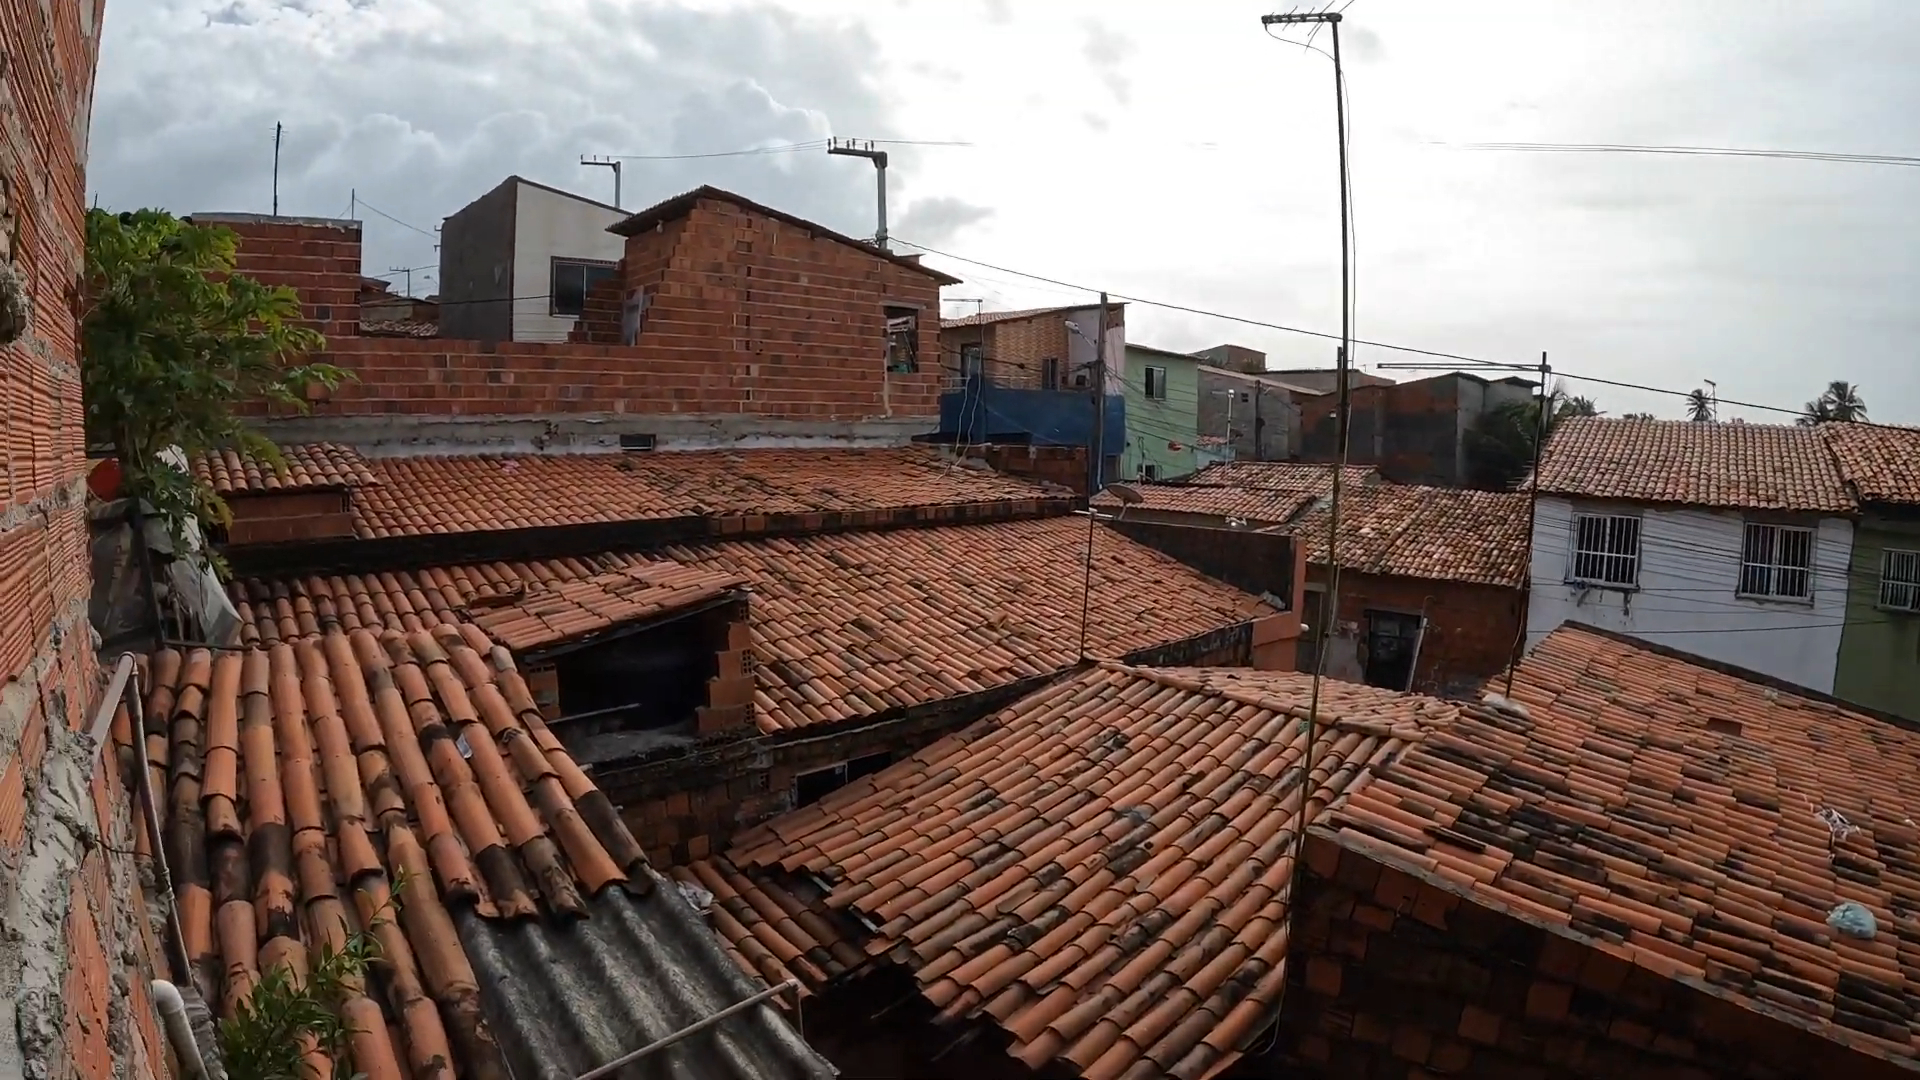 Fortaleza brazil - bad neighbourhoods on brazil